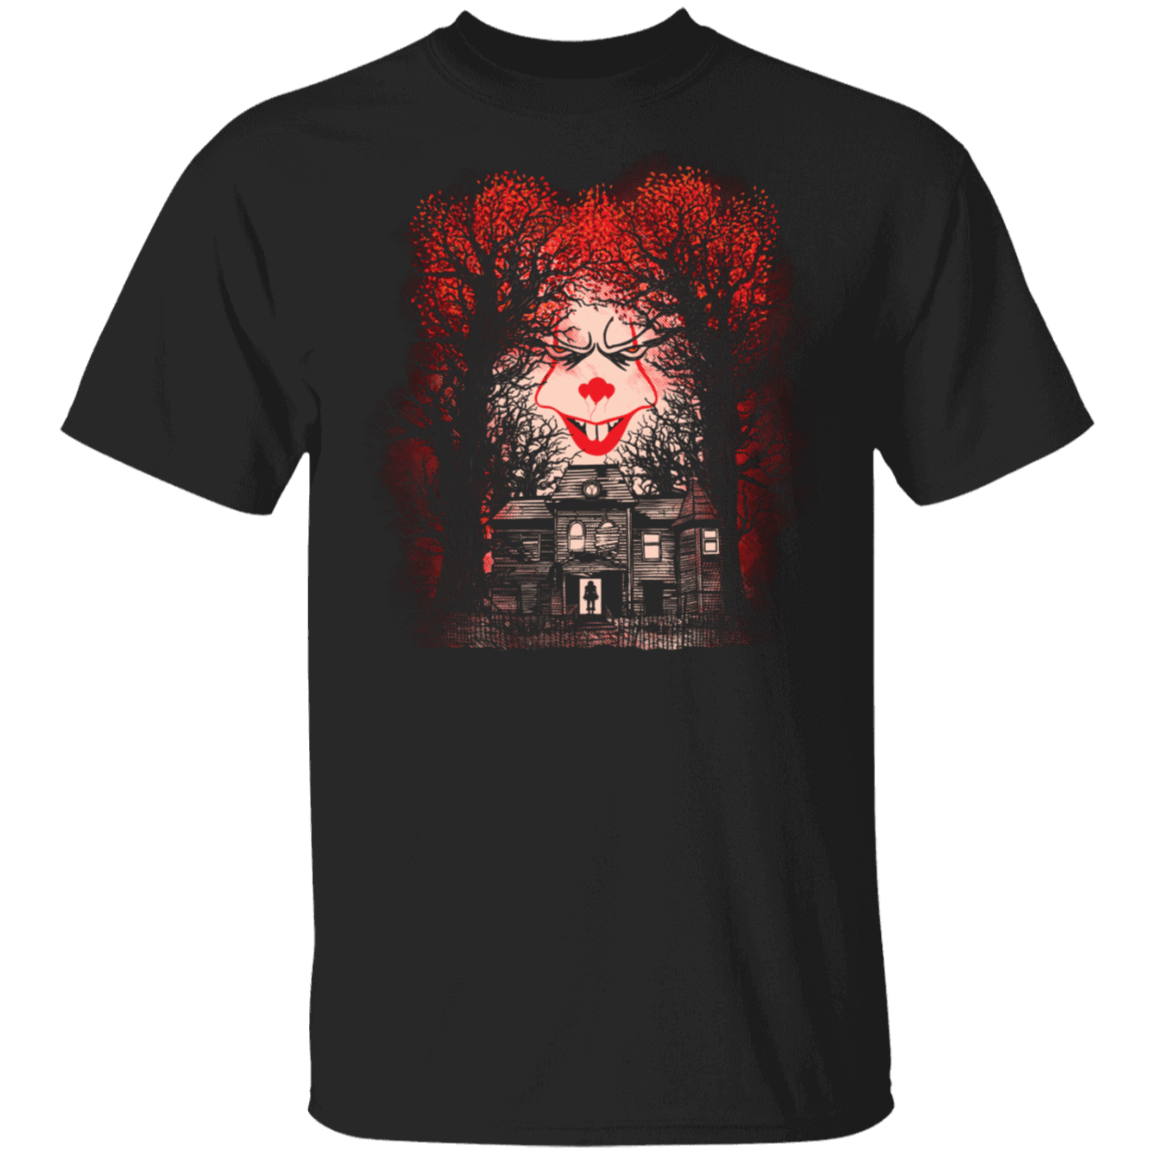 T-Shirts Black / S House Of Horrors T-Shirt